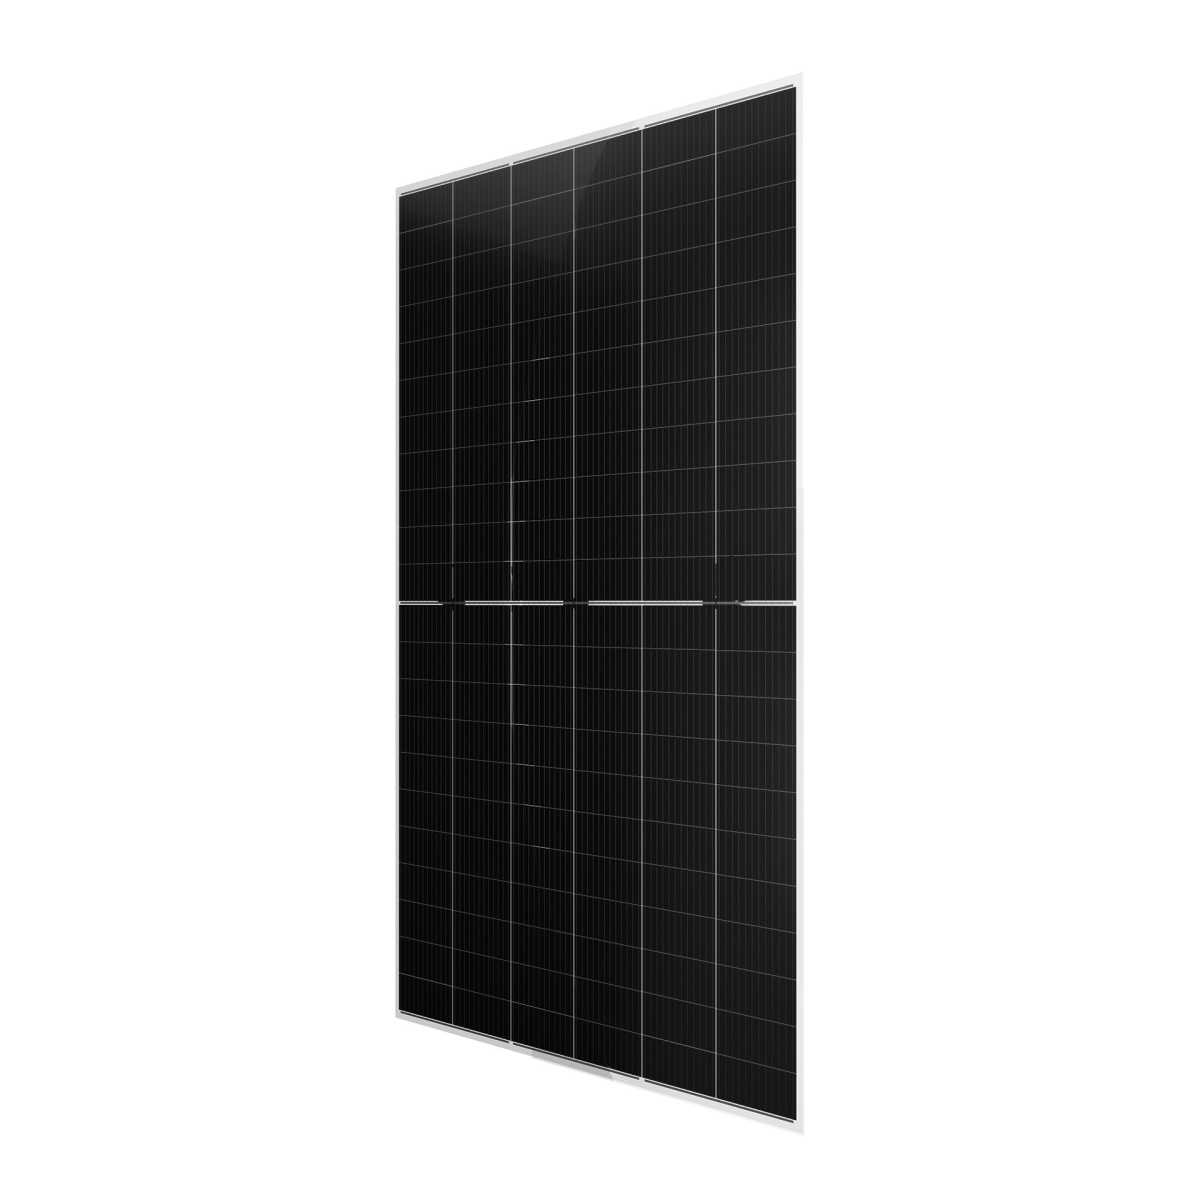 TommaTech 675Wp M12 132PM Cells Bifacial G2G Half-Cut MB Solar Panel